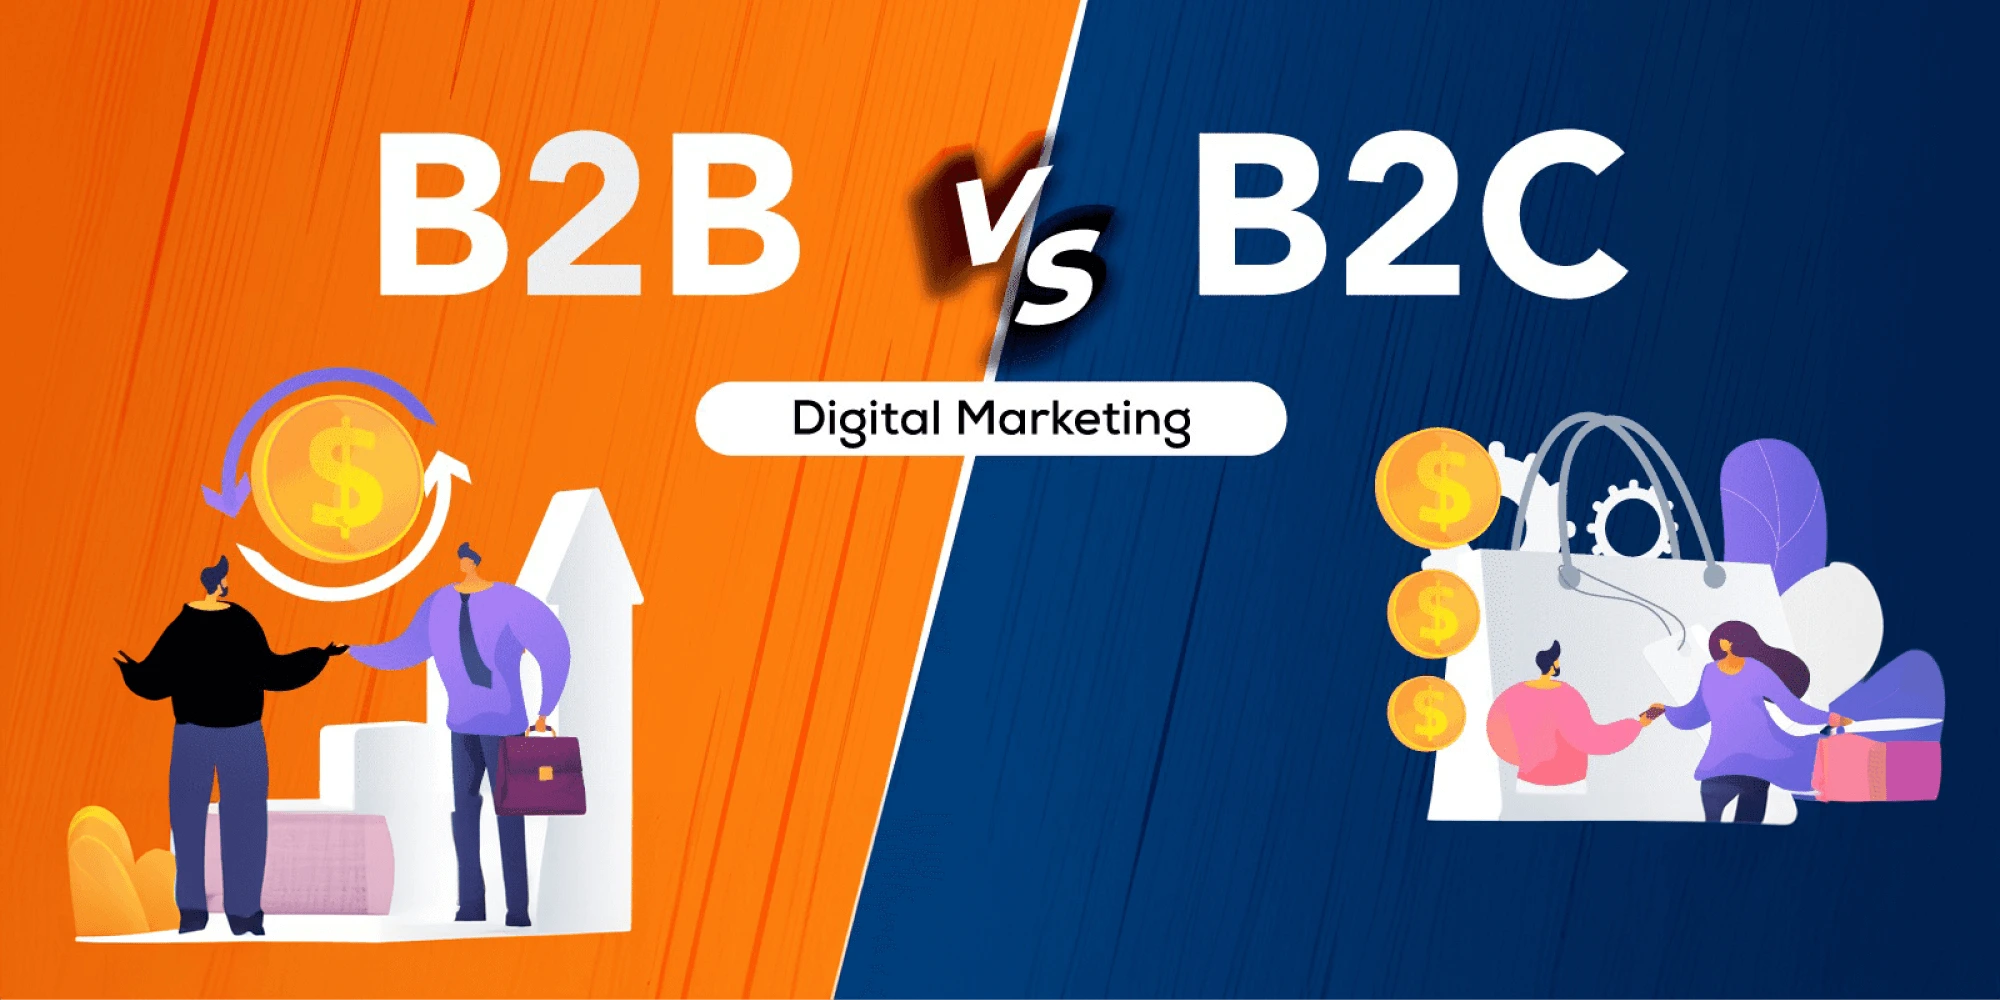 Digital Marketing for B2Bvs. B2C